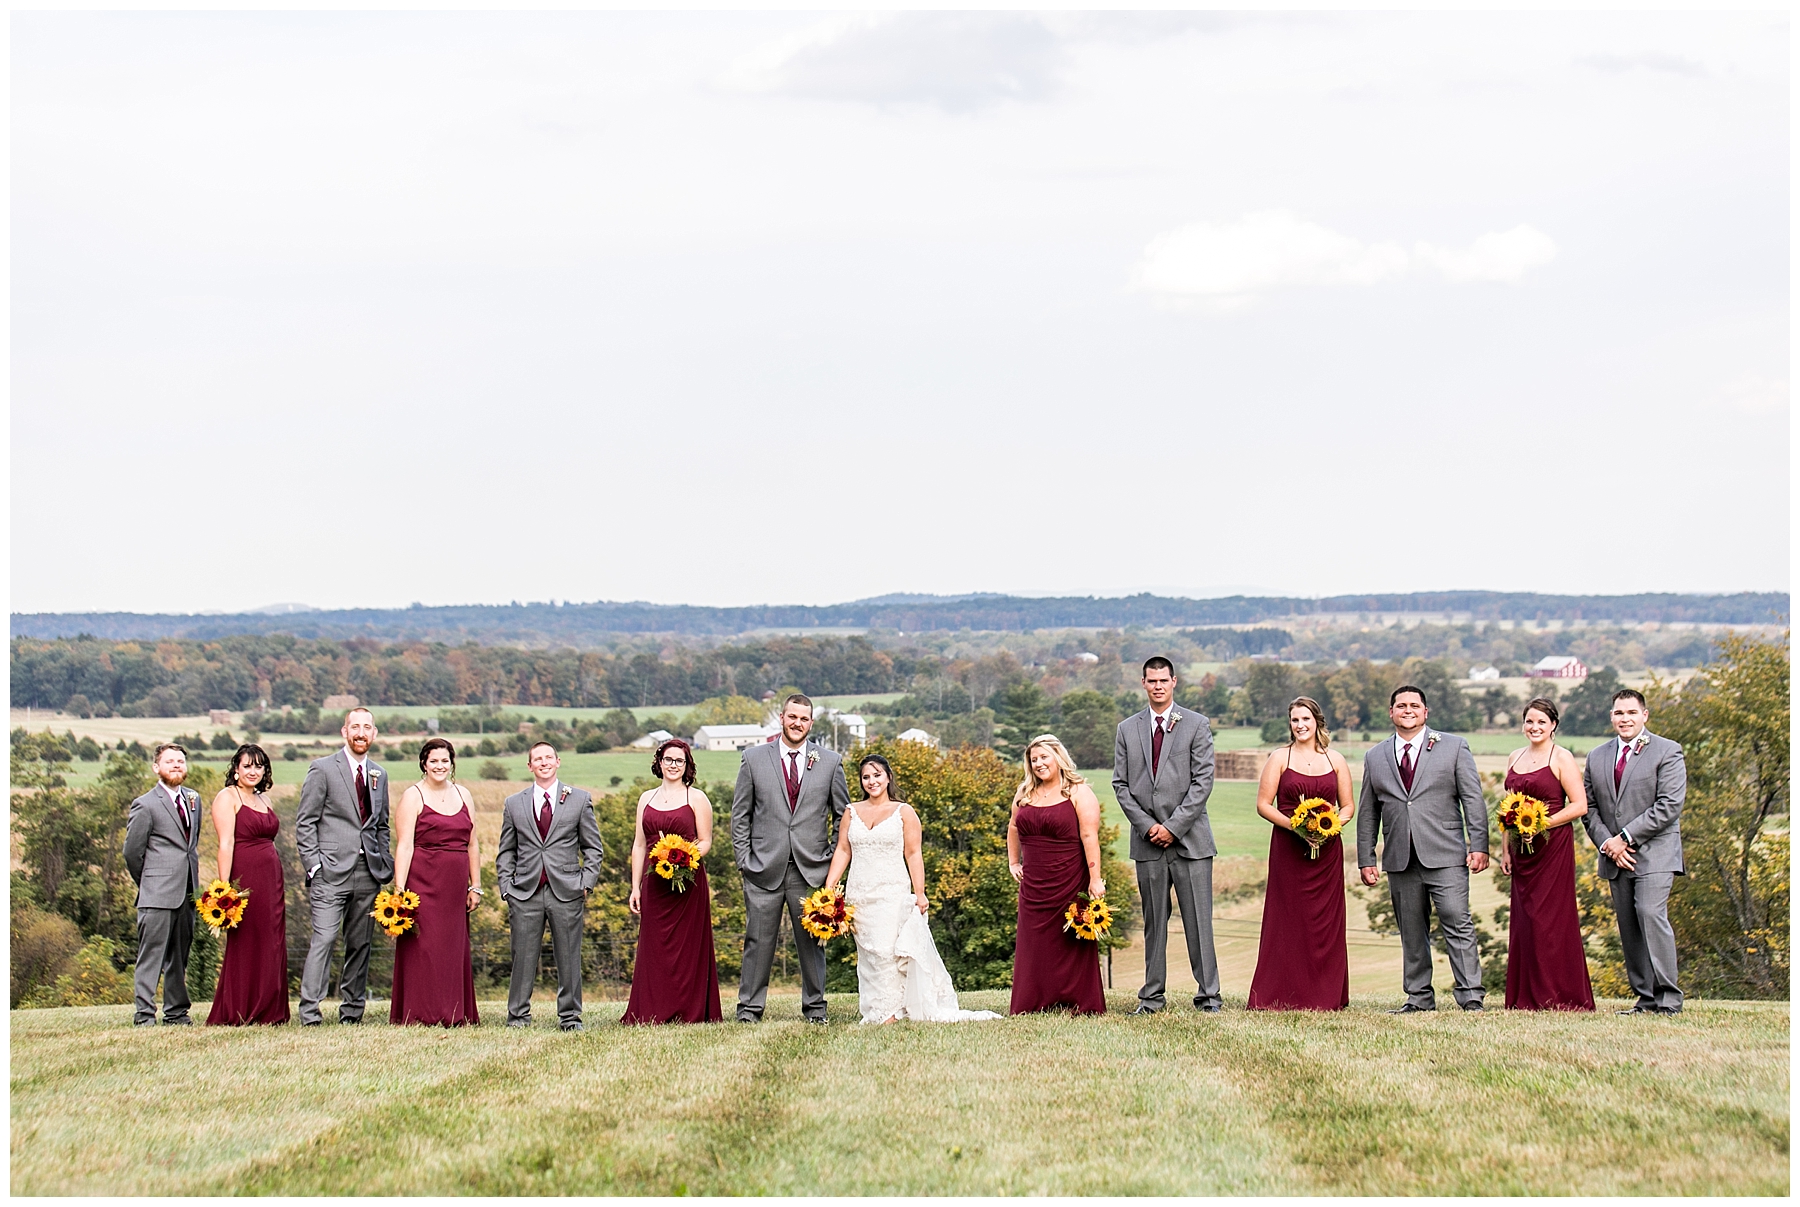 M+K Lodges at Gettysburg Wedding LivingRadiantPhotographyphotos_0022.jpg